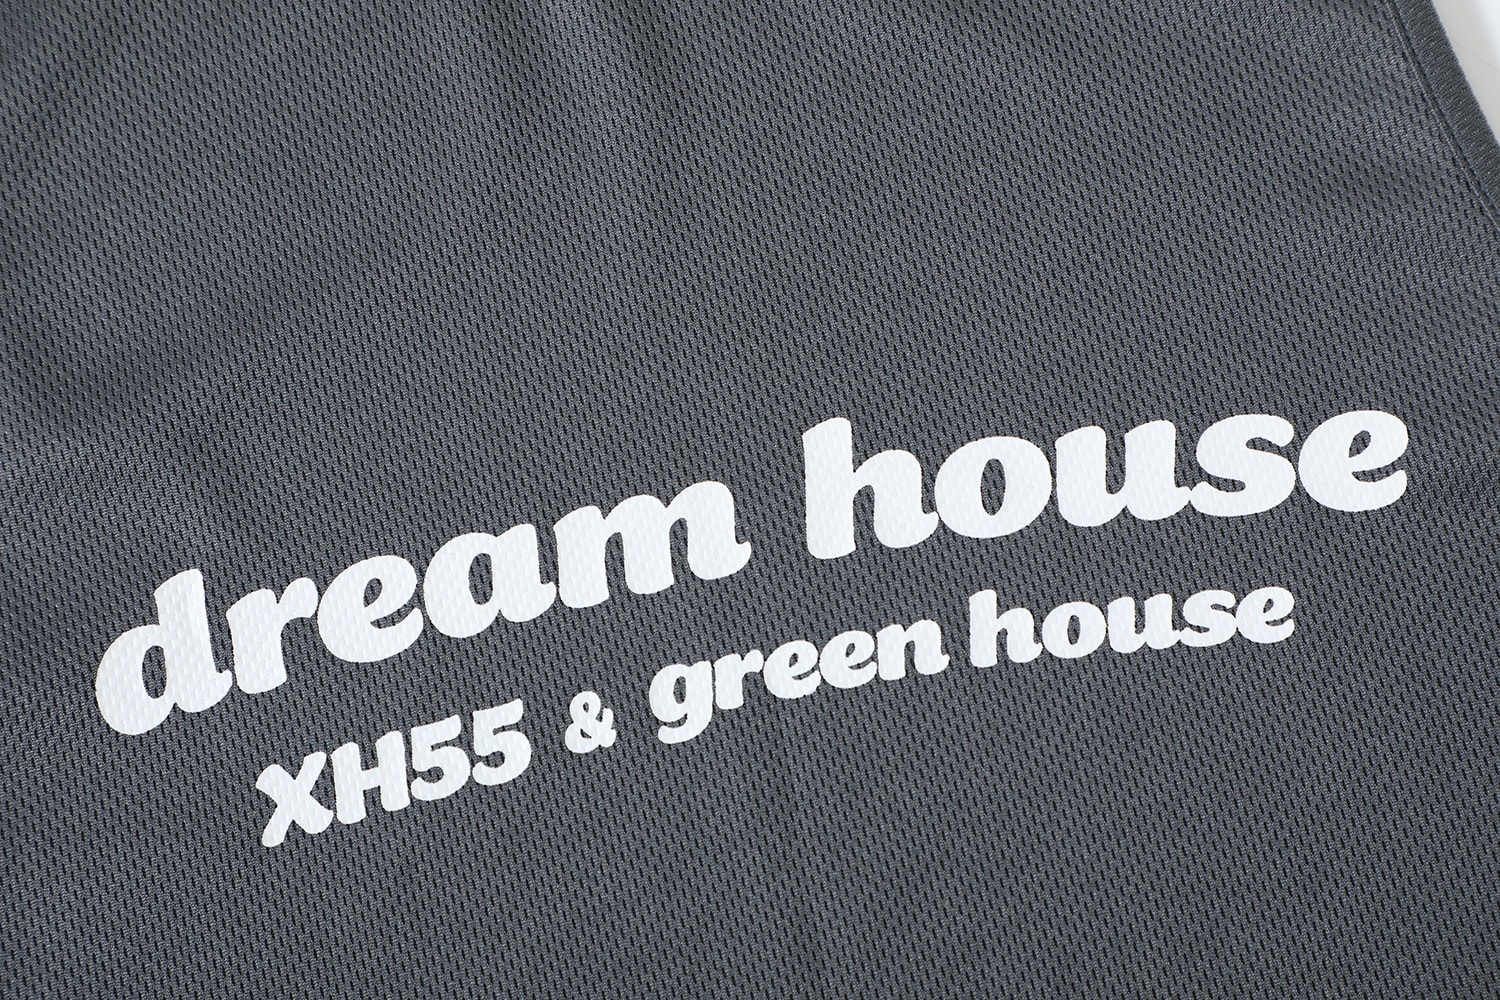 GREEN HOUSE 携手 XH55 打造全新联名球衣